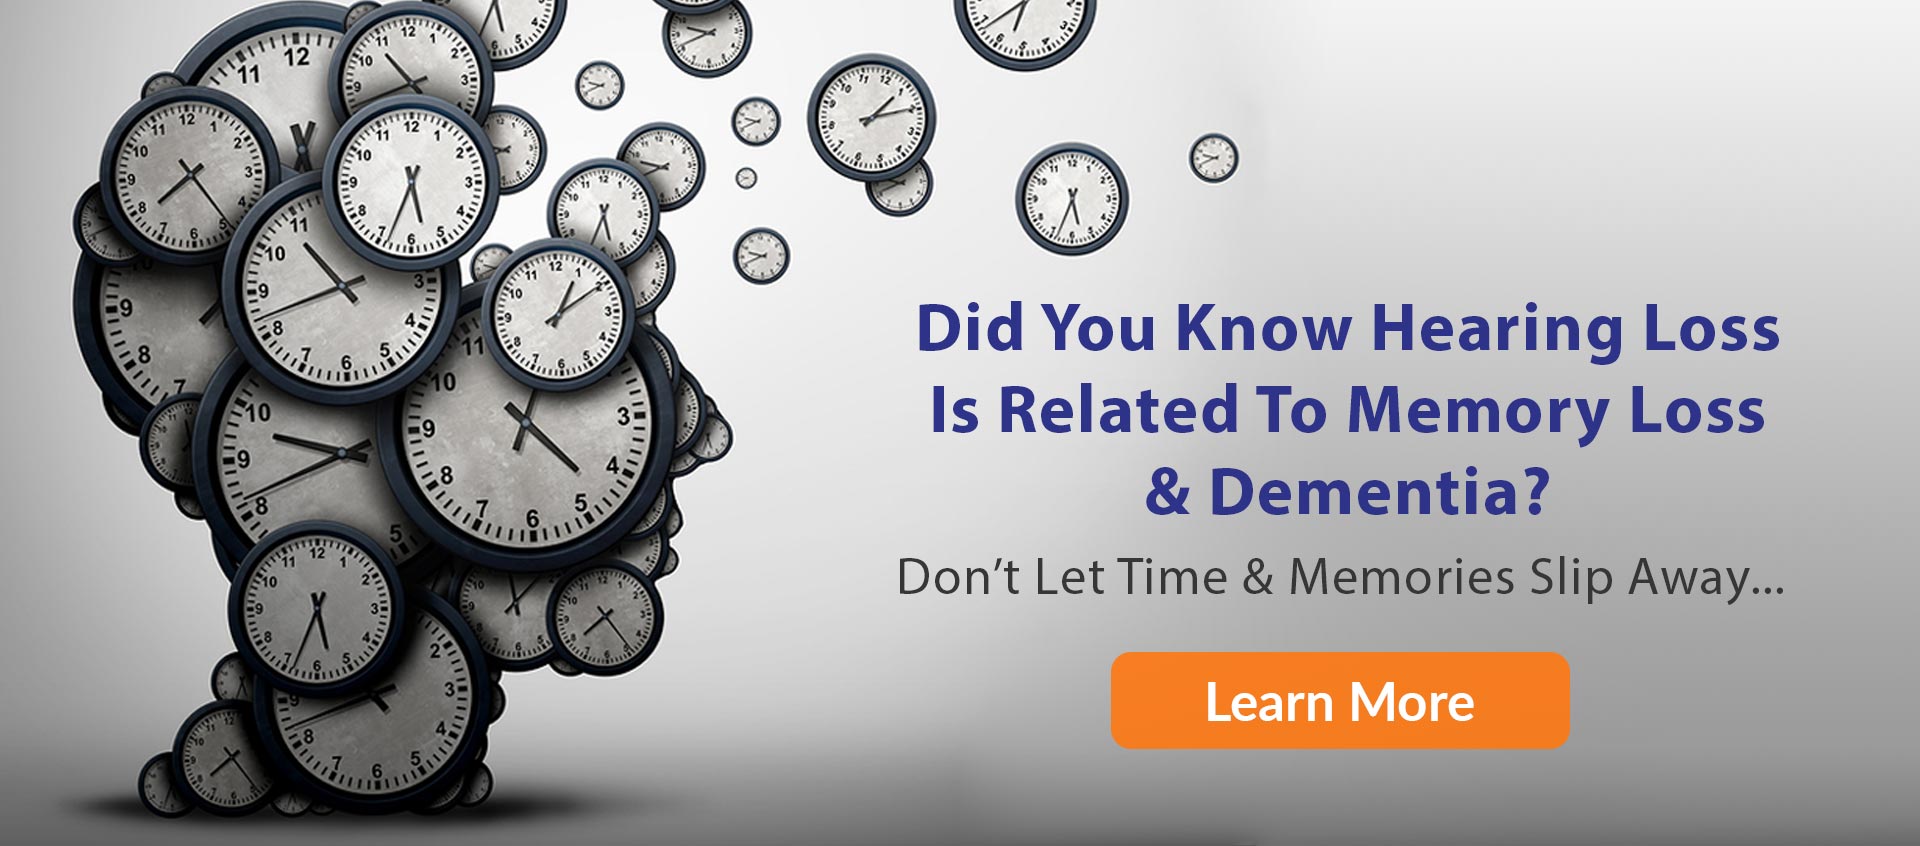 memory loss and dementia risk